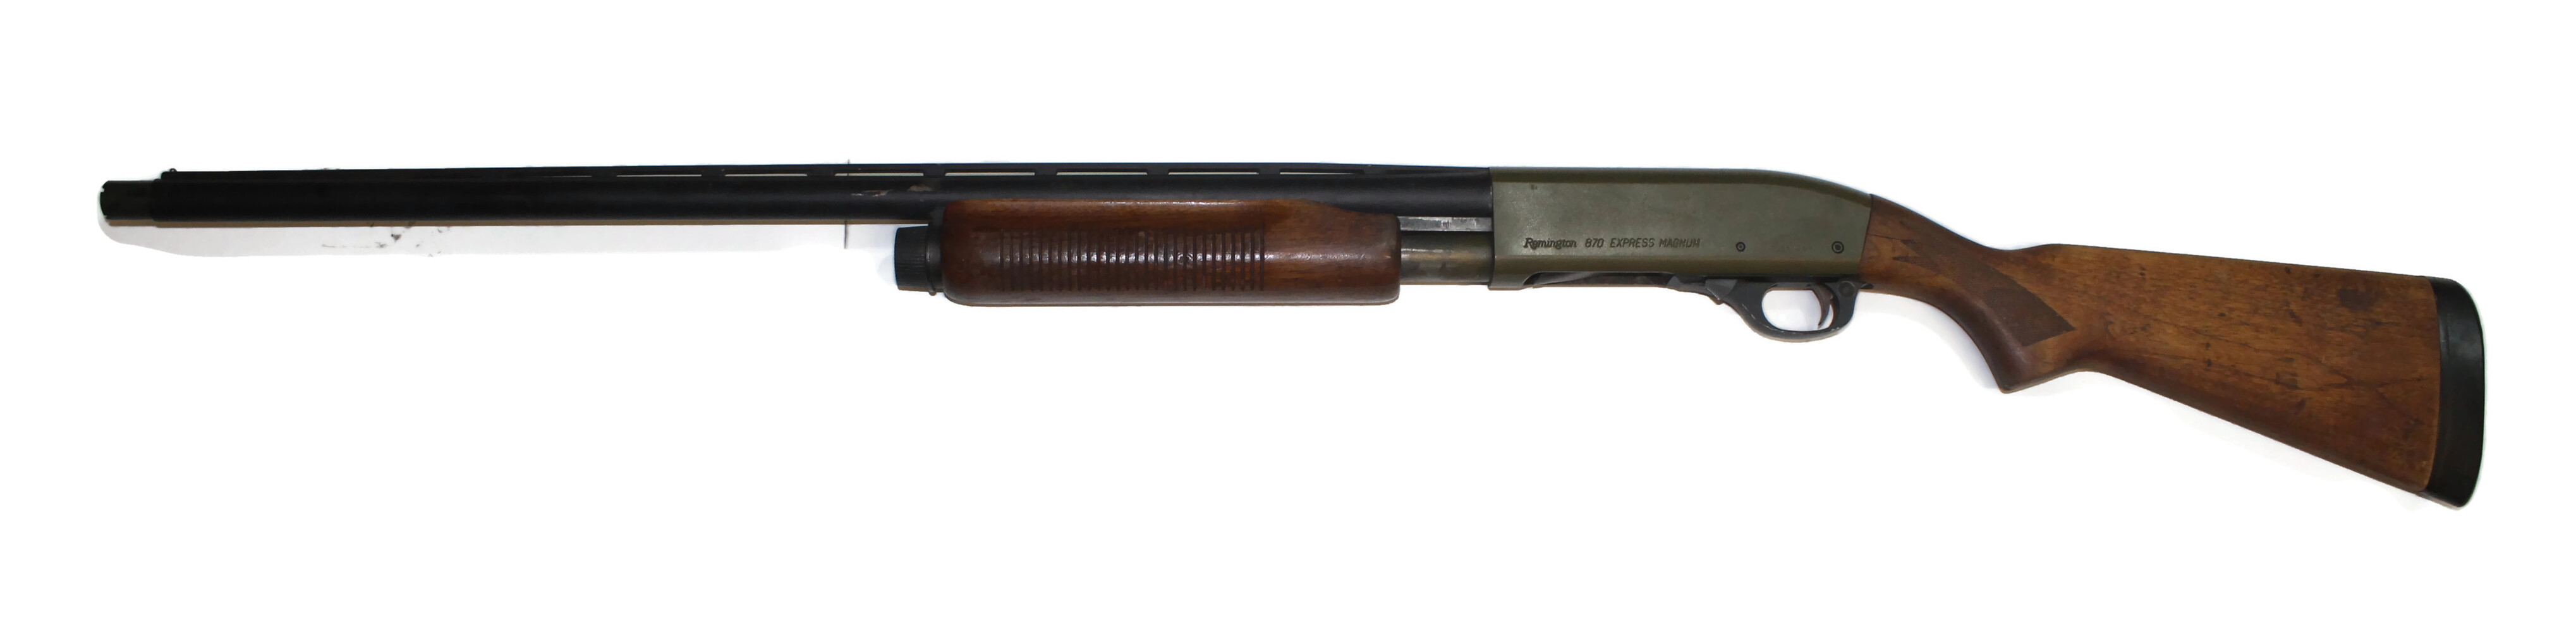 Remington 870 Pump Shotgun 12ga Usa Pawn